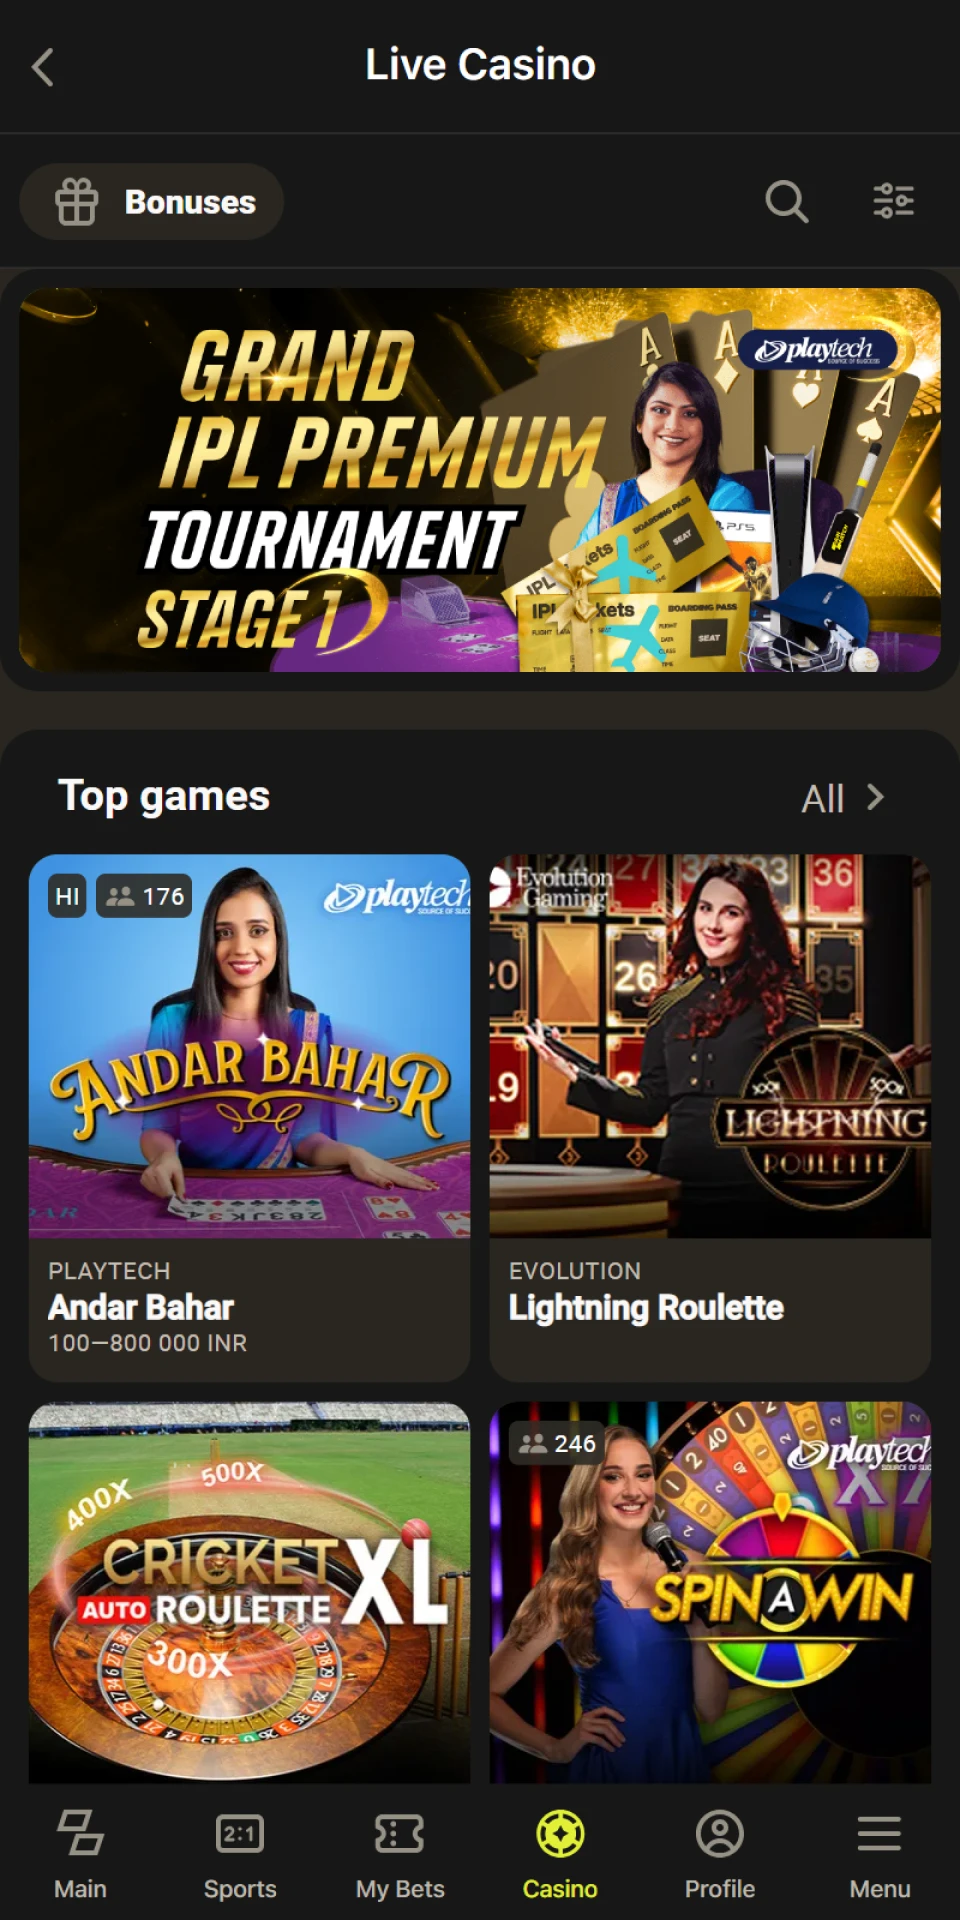 The Parimatch mobile app has many profitable casino games.